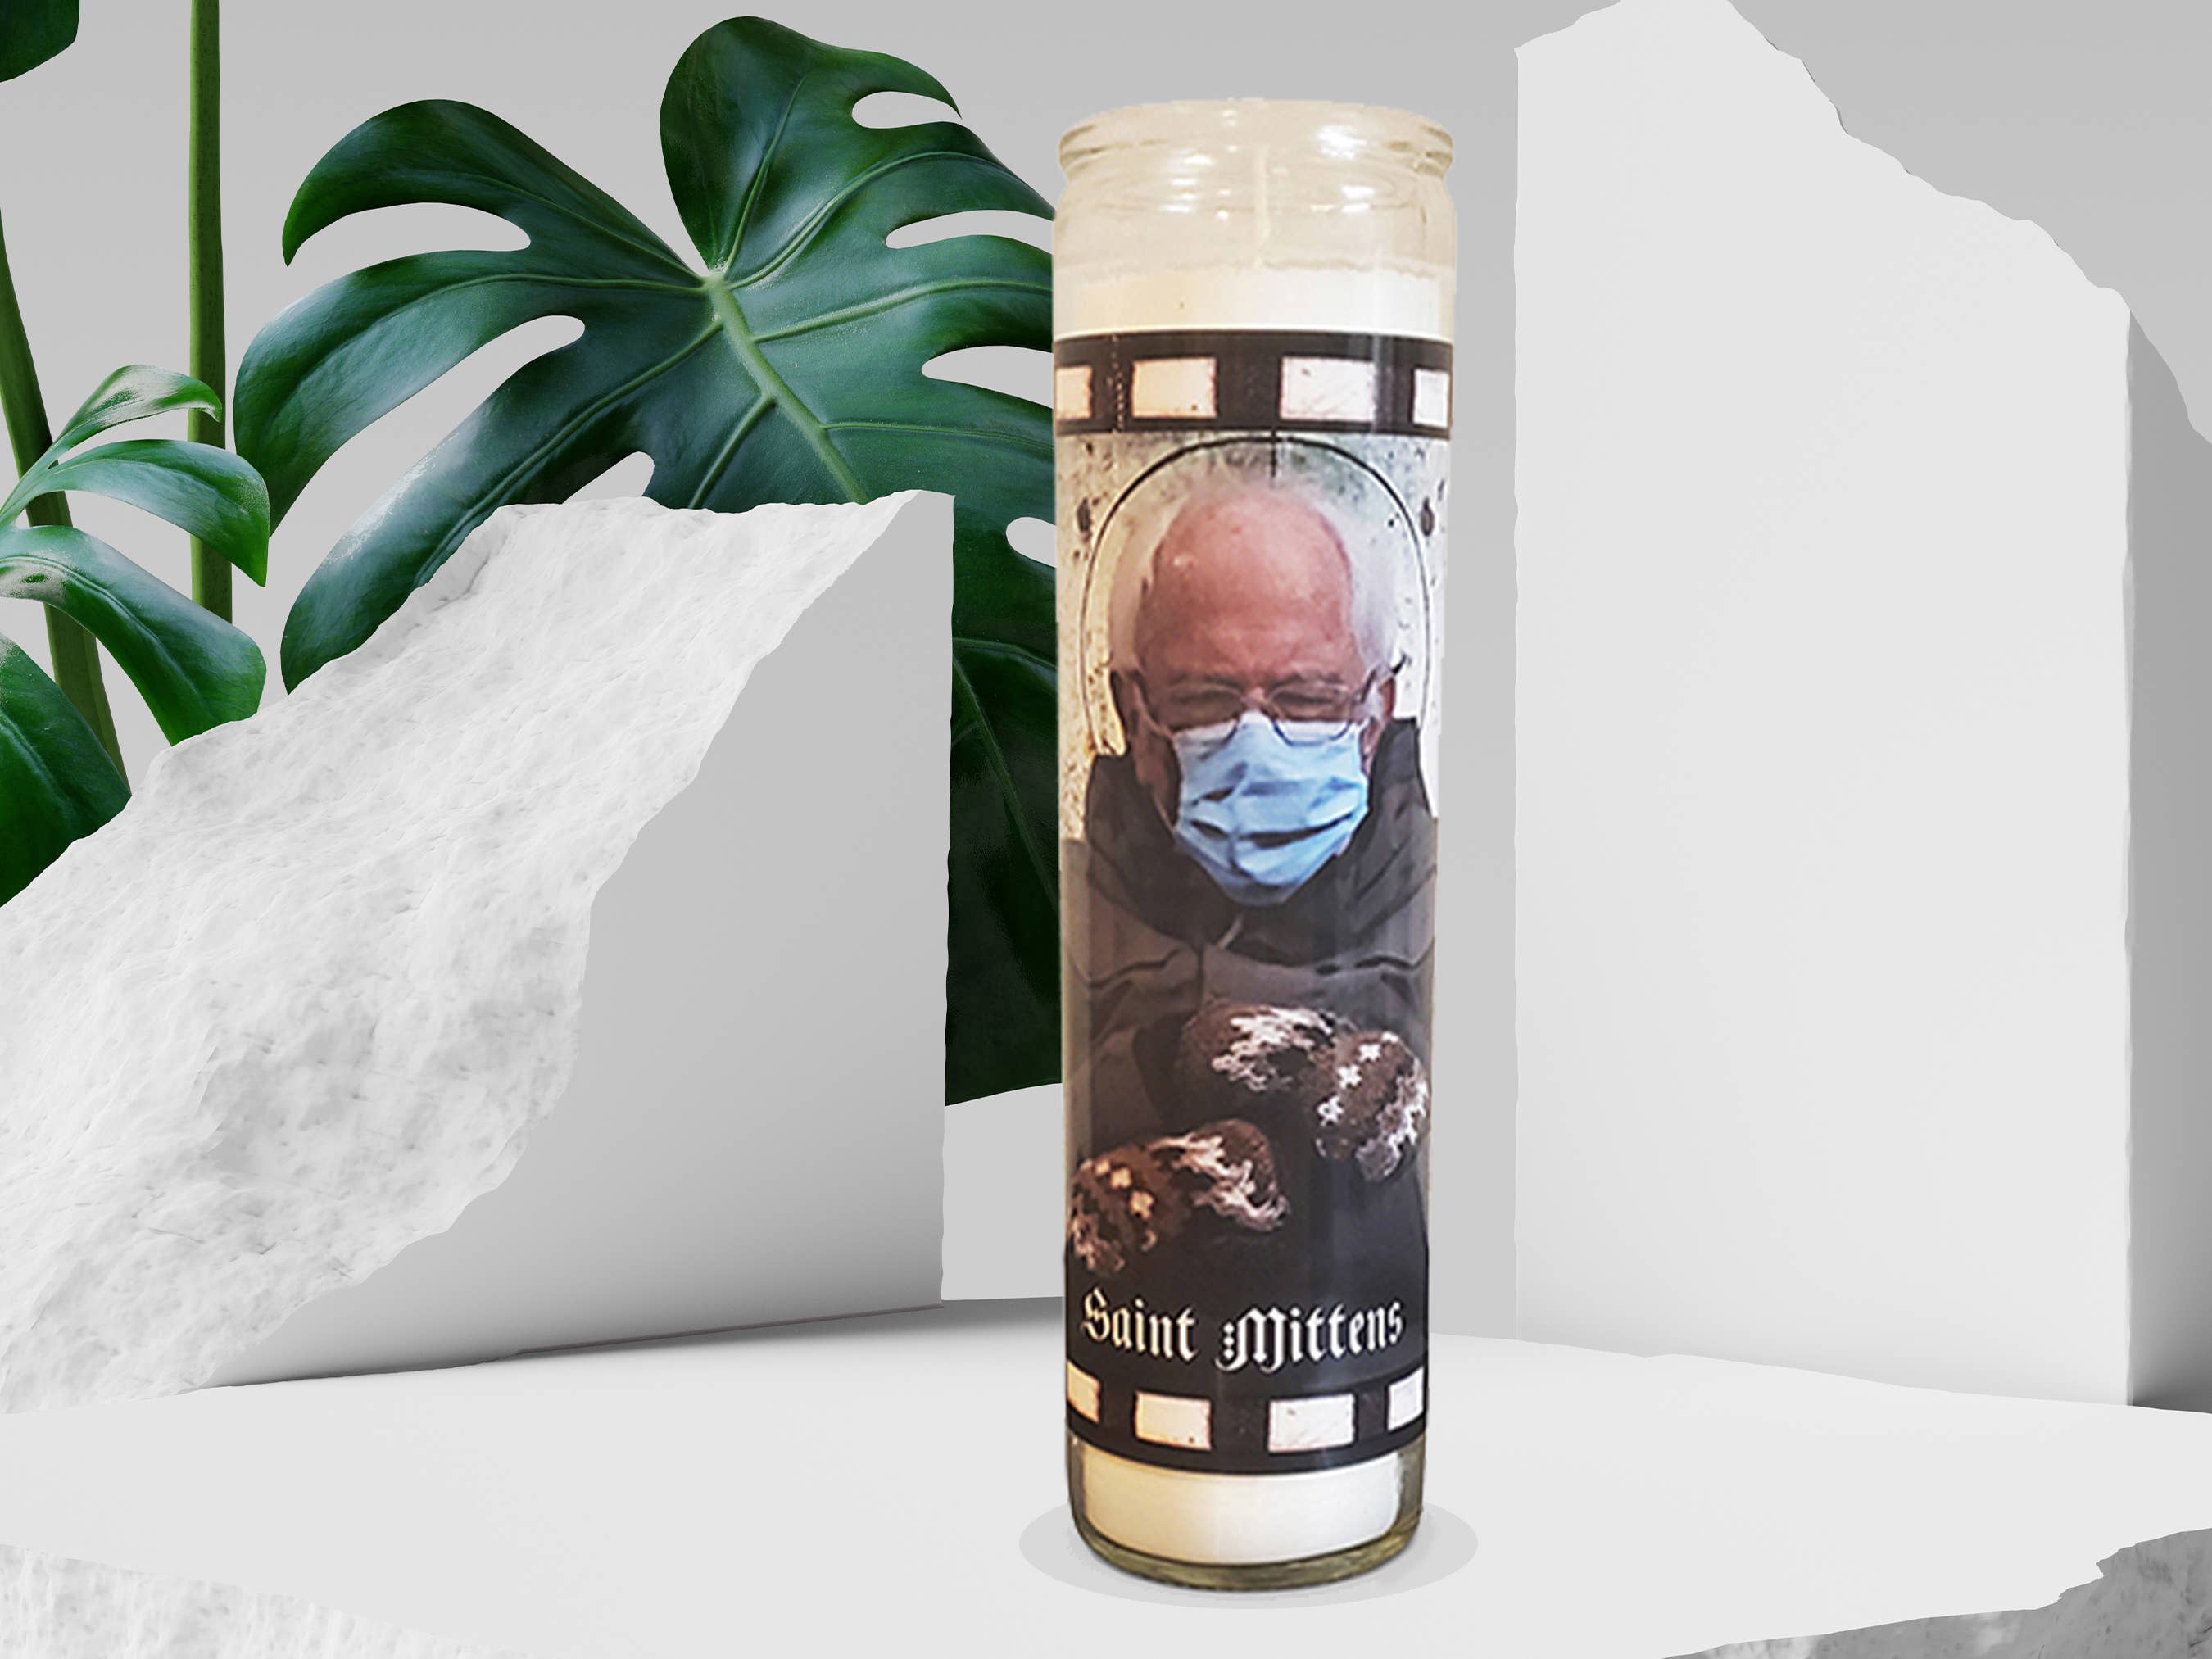 Saint Mittens Bernie Sanders Prayer Candle